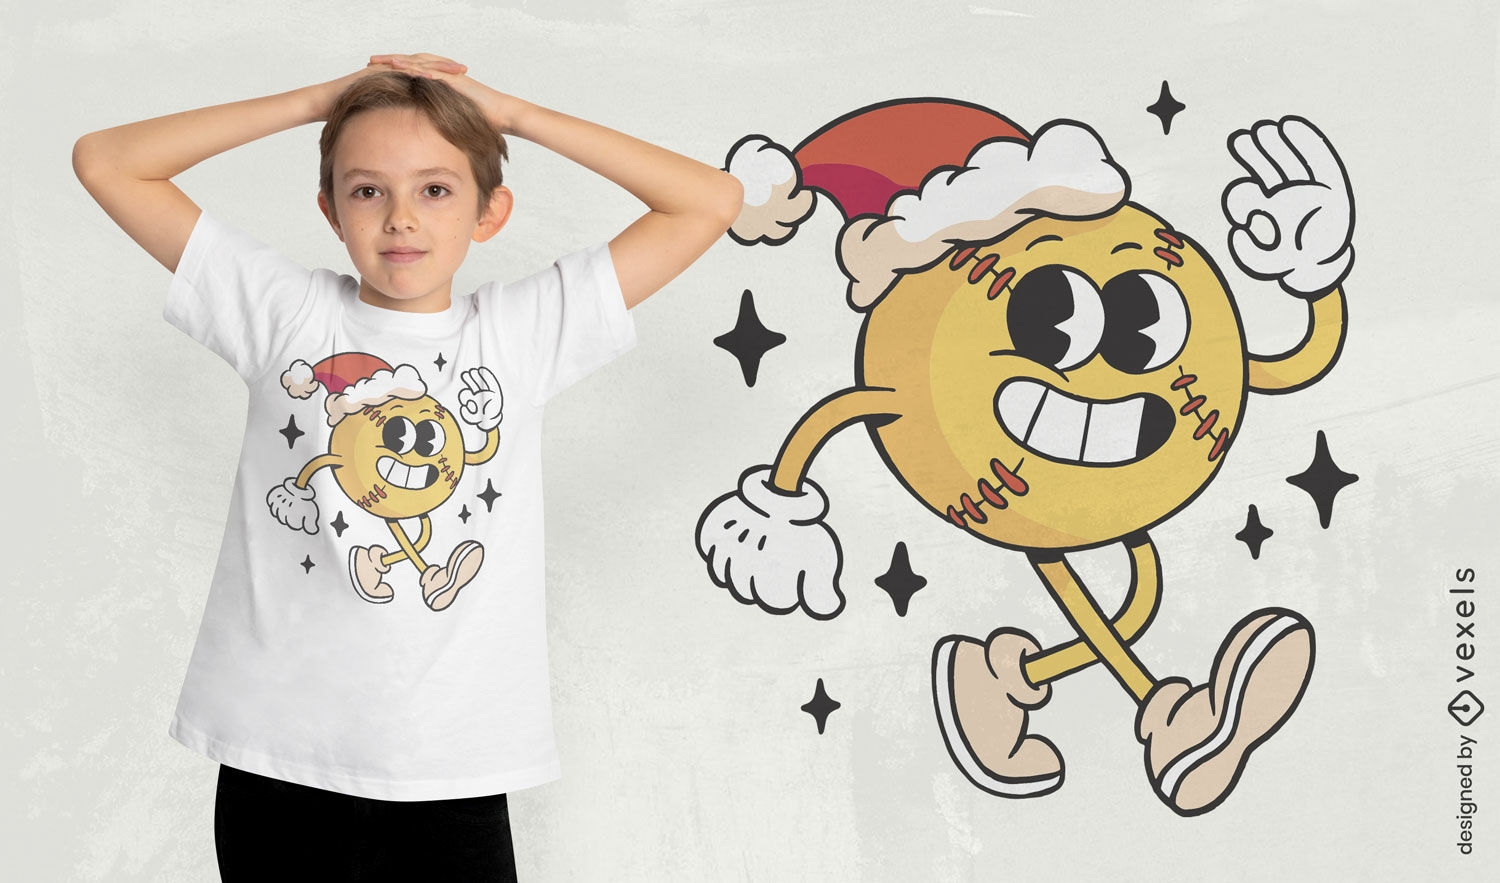 Fr?hliches Weihnachts-Softball-Ballon-T-Shirt-Design